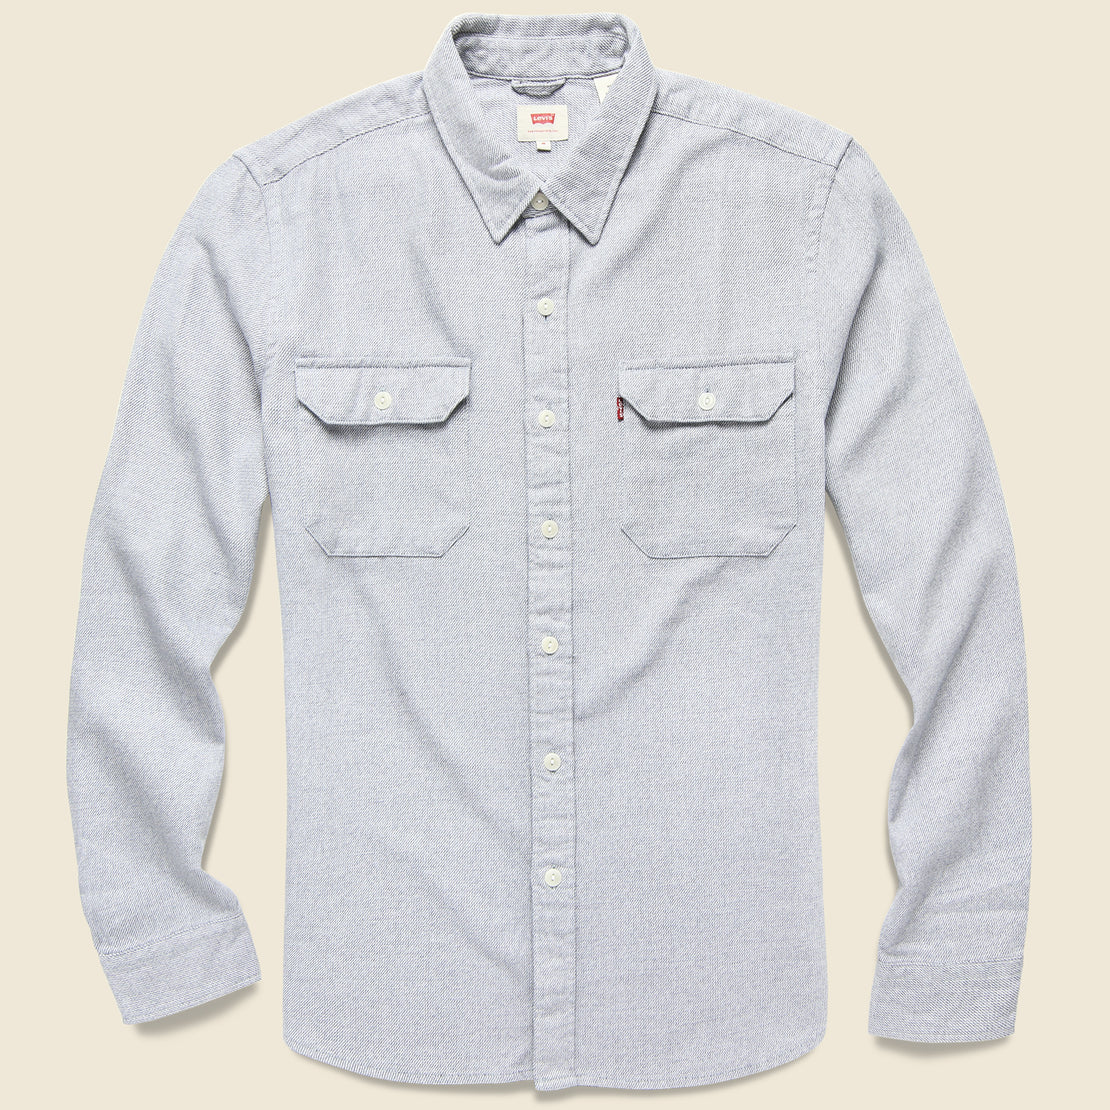 Levis Premium Jackson Worker Shirt - Grizzly Graphite